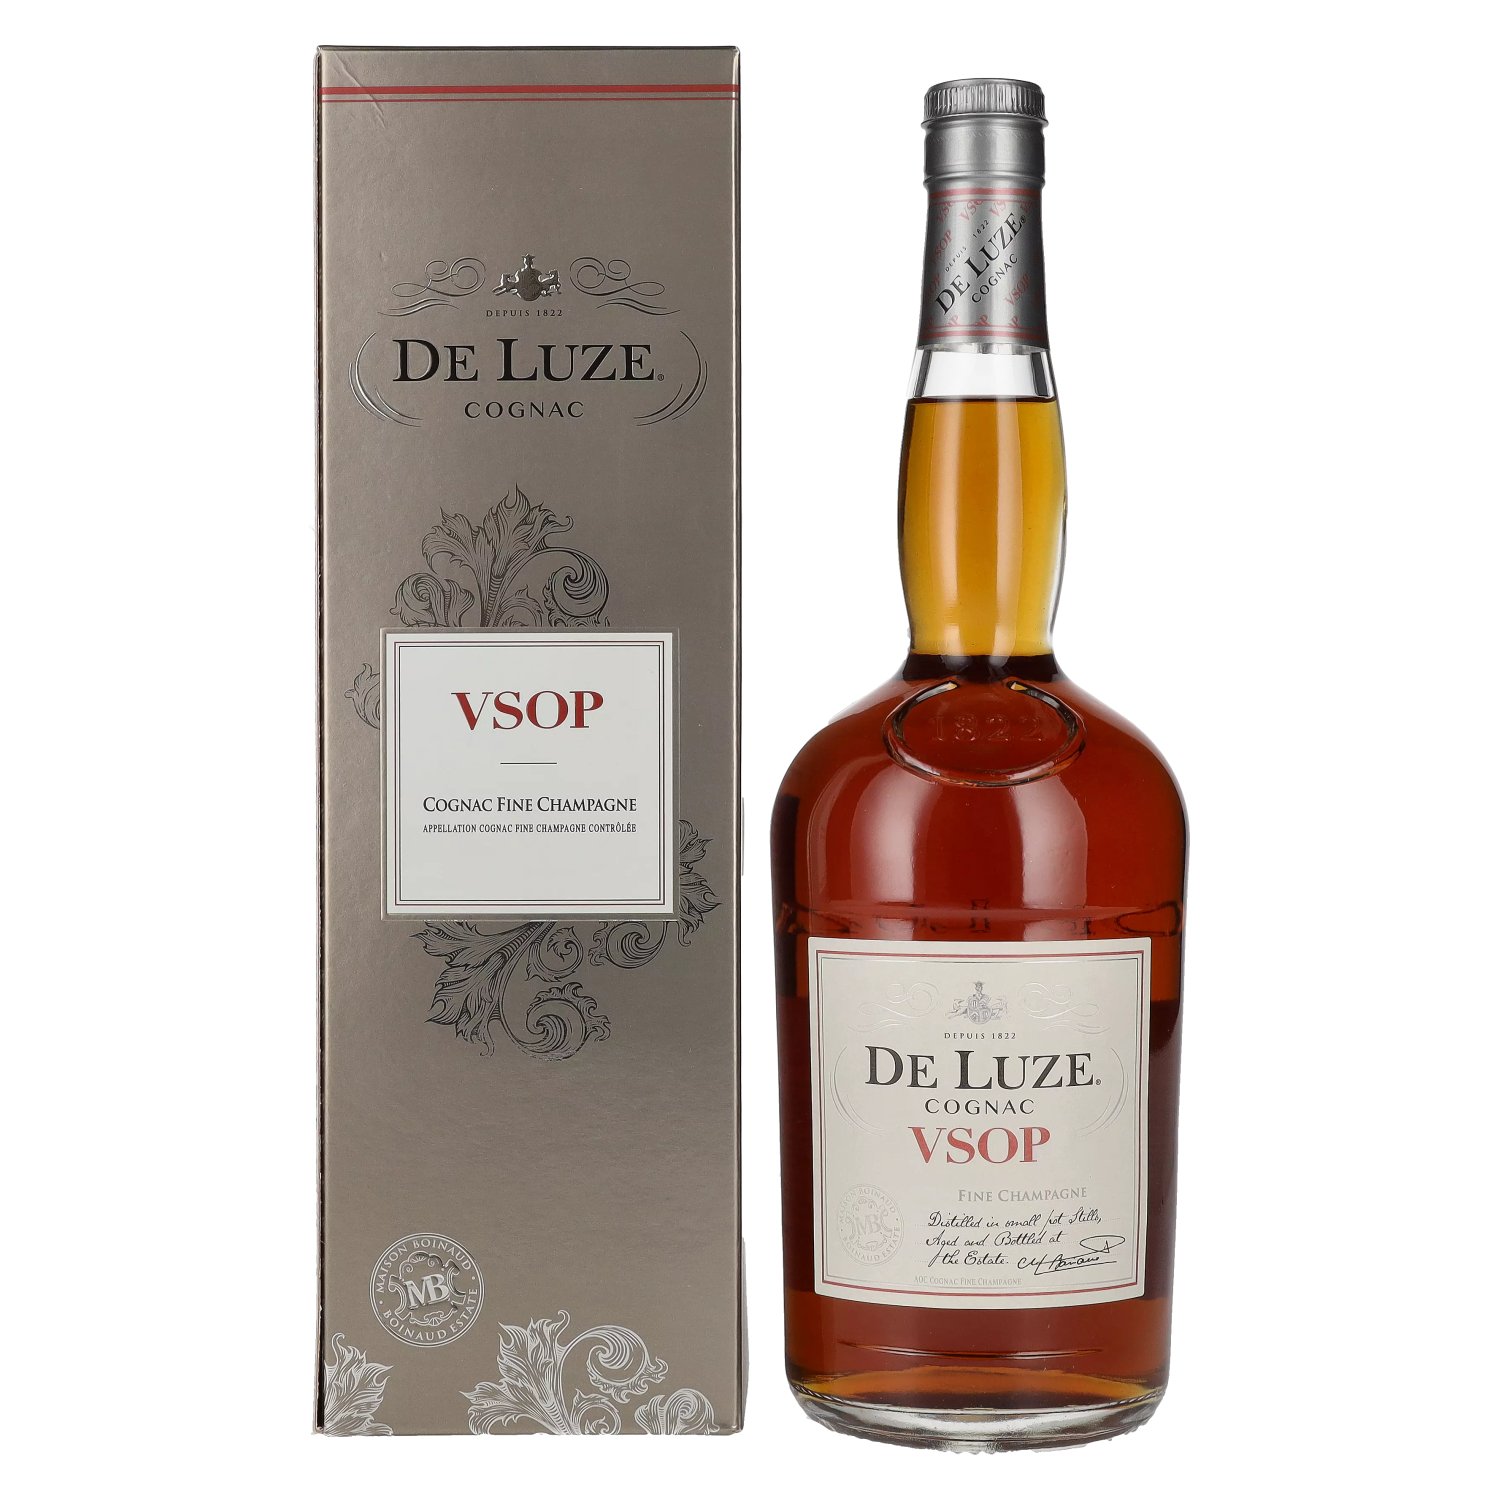 De Luze Cognac VSOP Giftbox 1l Cognac Champagne in 40% Vol. Fine